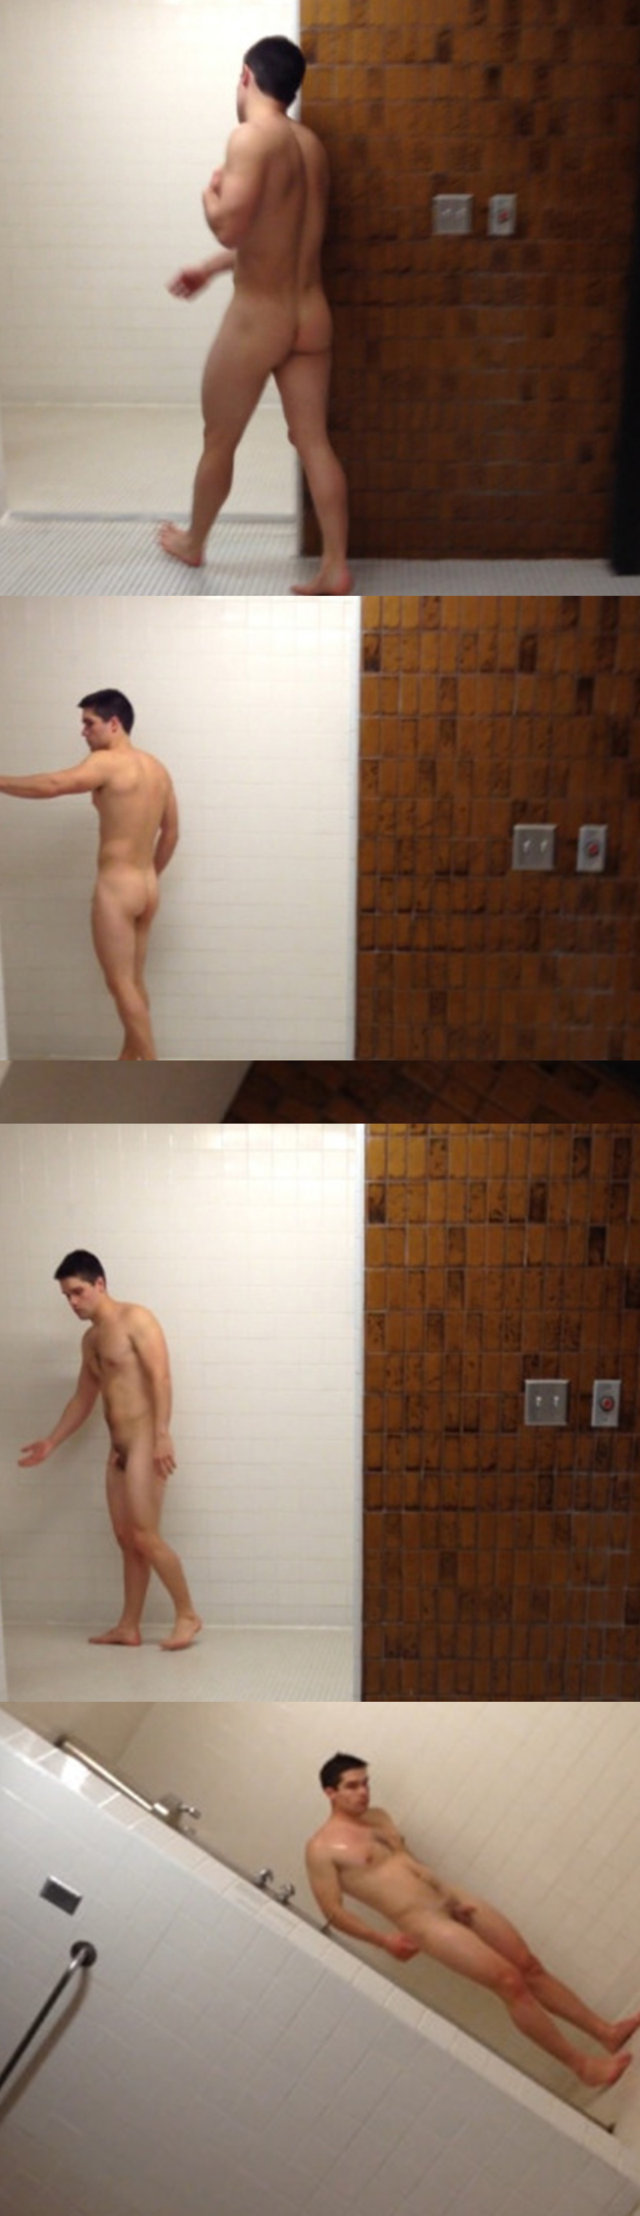 spycam naked guy shower room gym